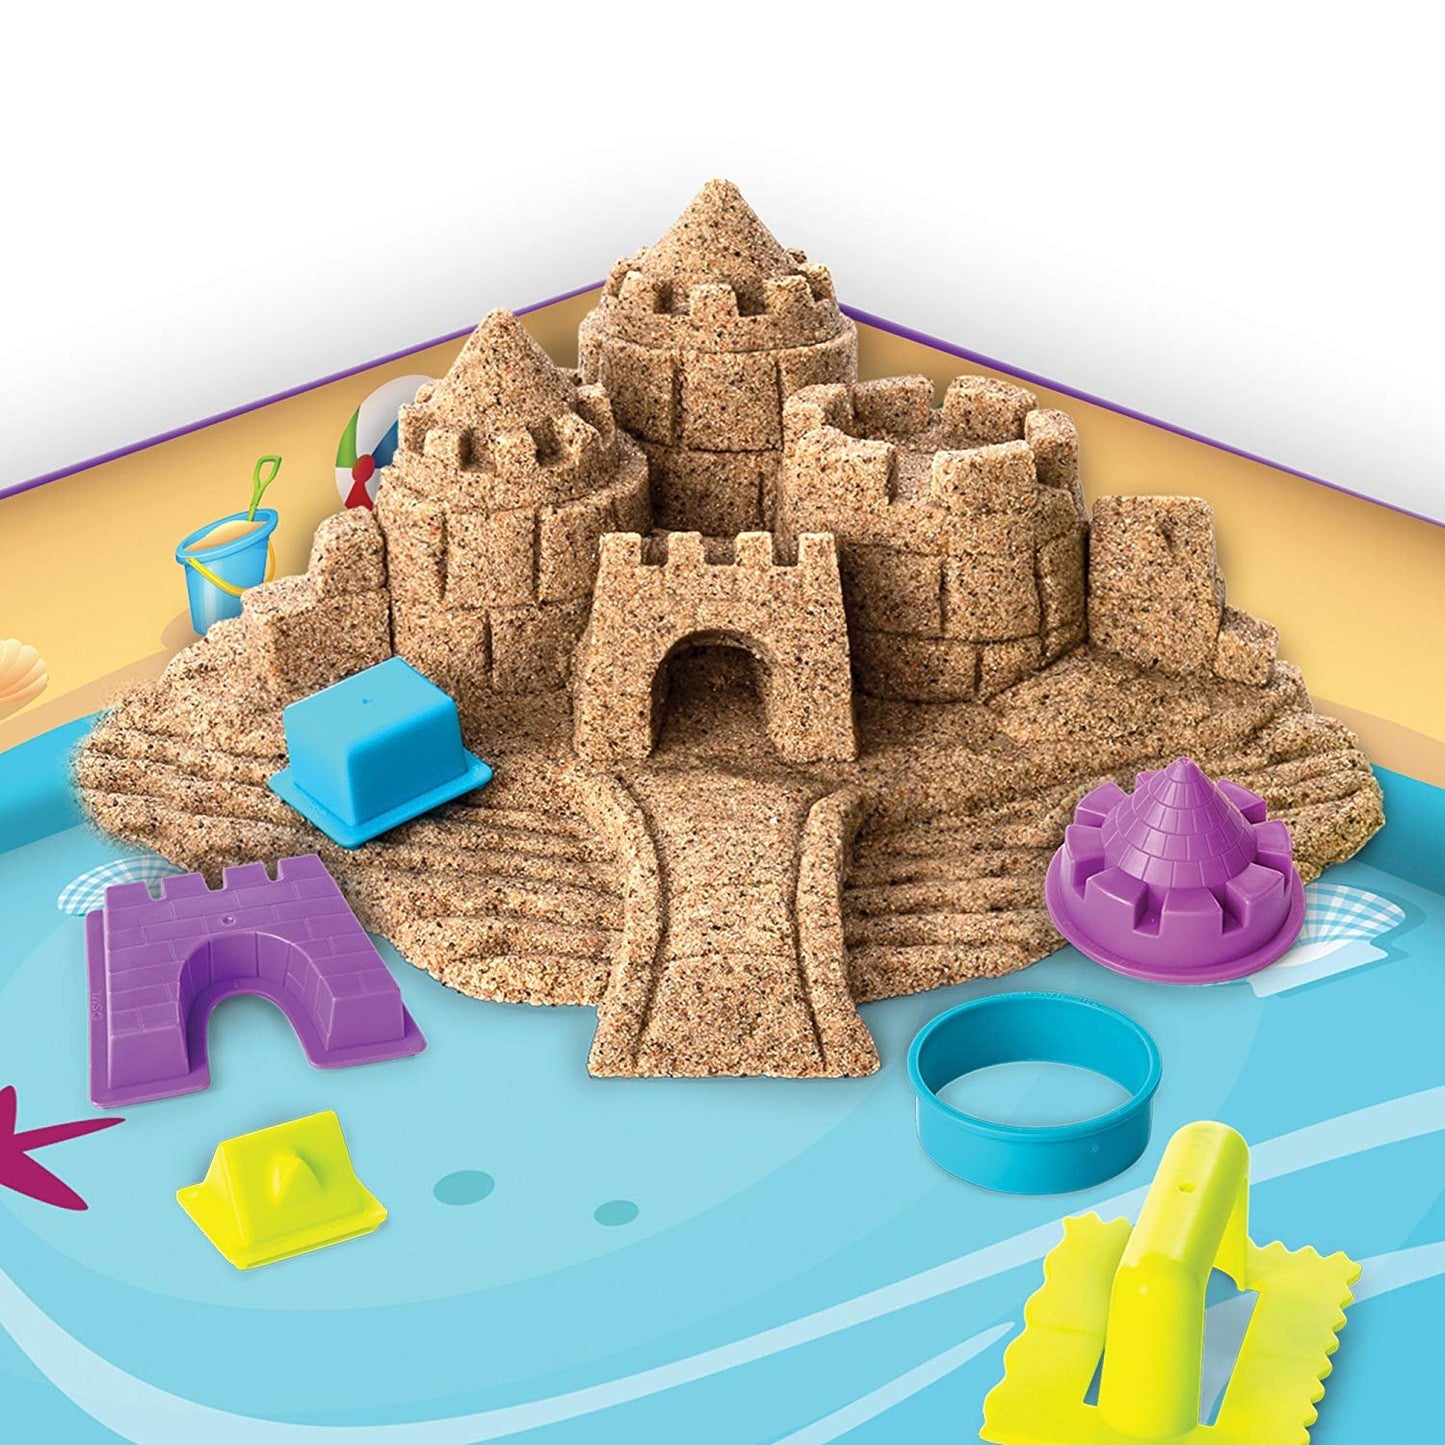 Kinetic Sand Mermaid Treasure – Sugar Babies Children's Boutique/Meg's  Shoppe